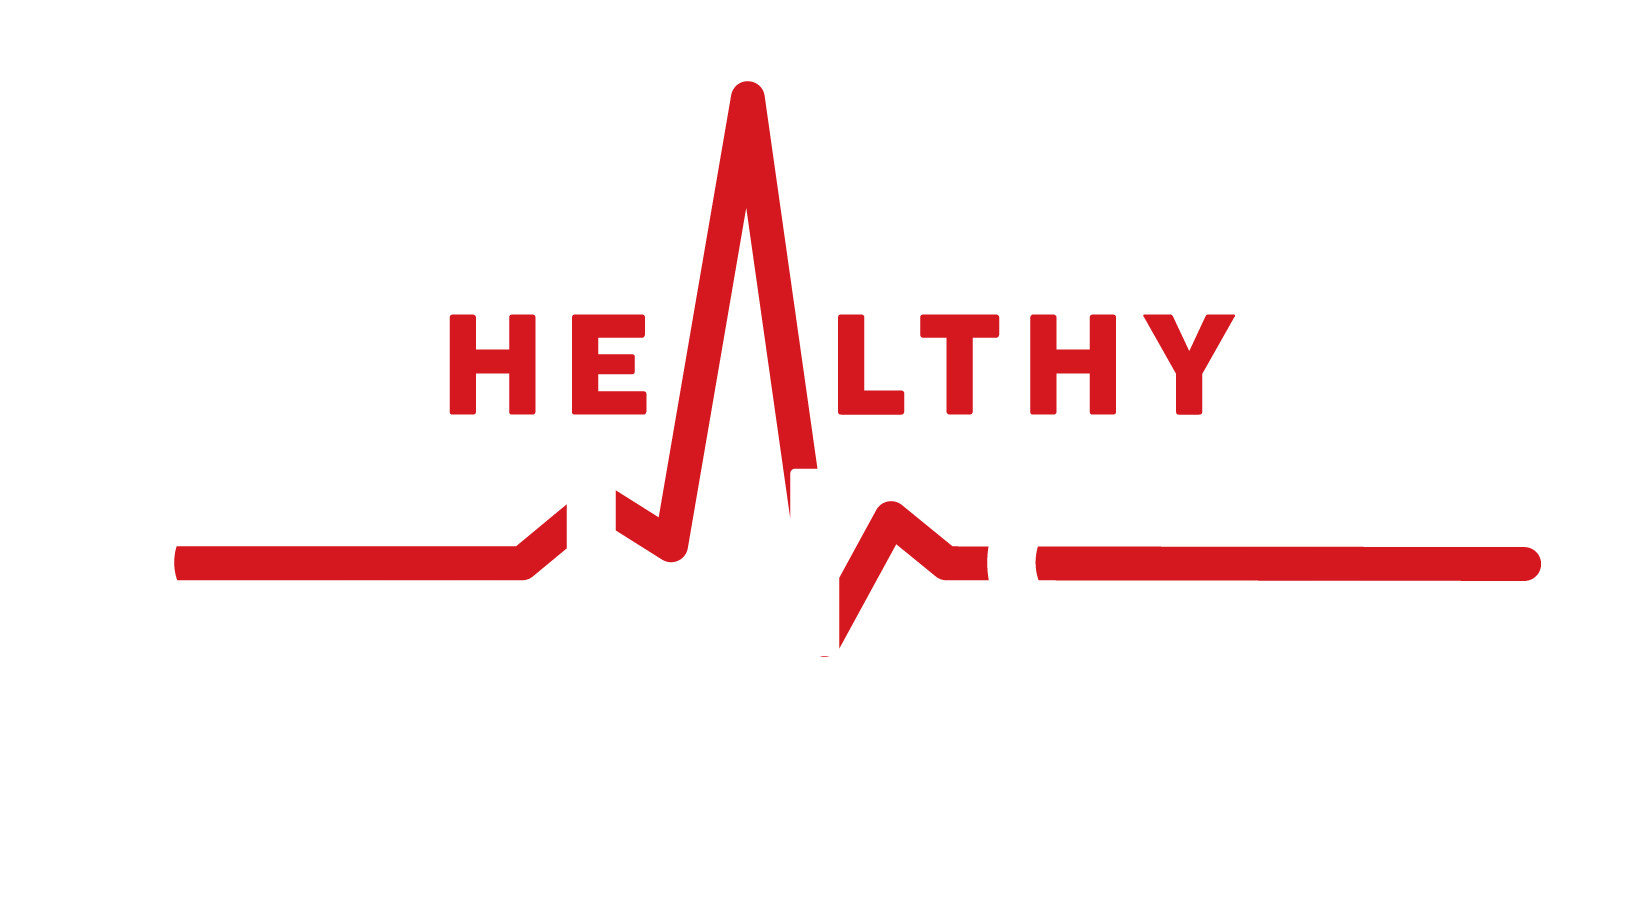 Healthy Church Podcast